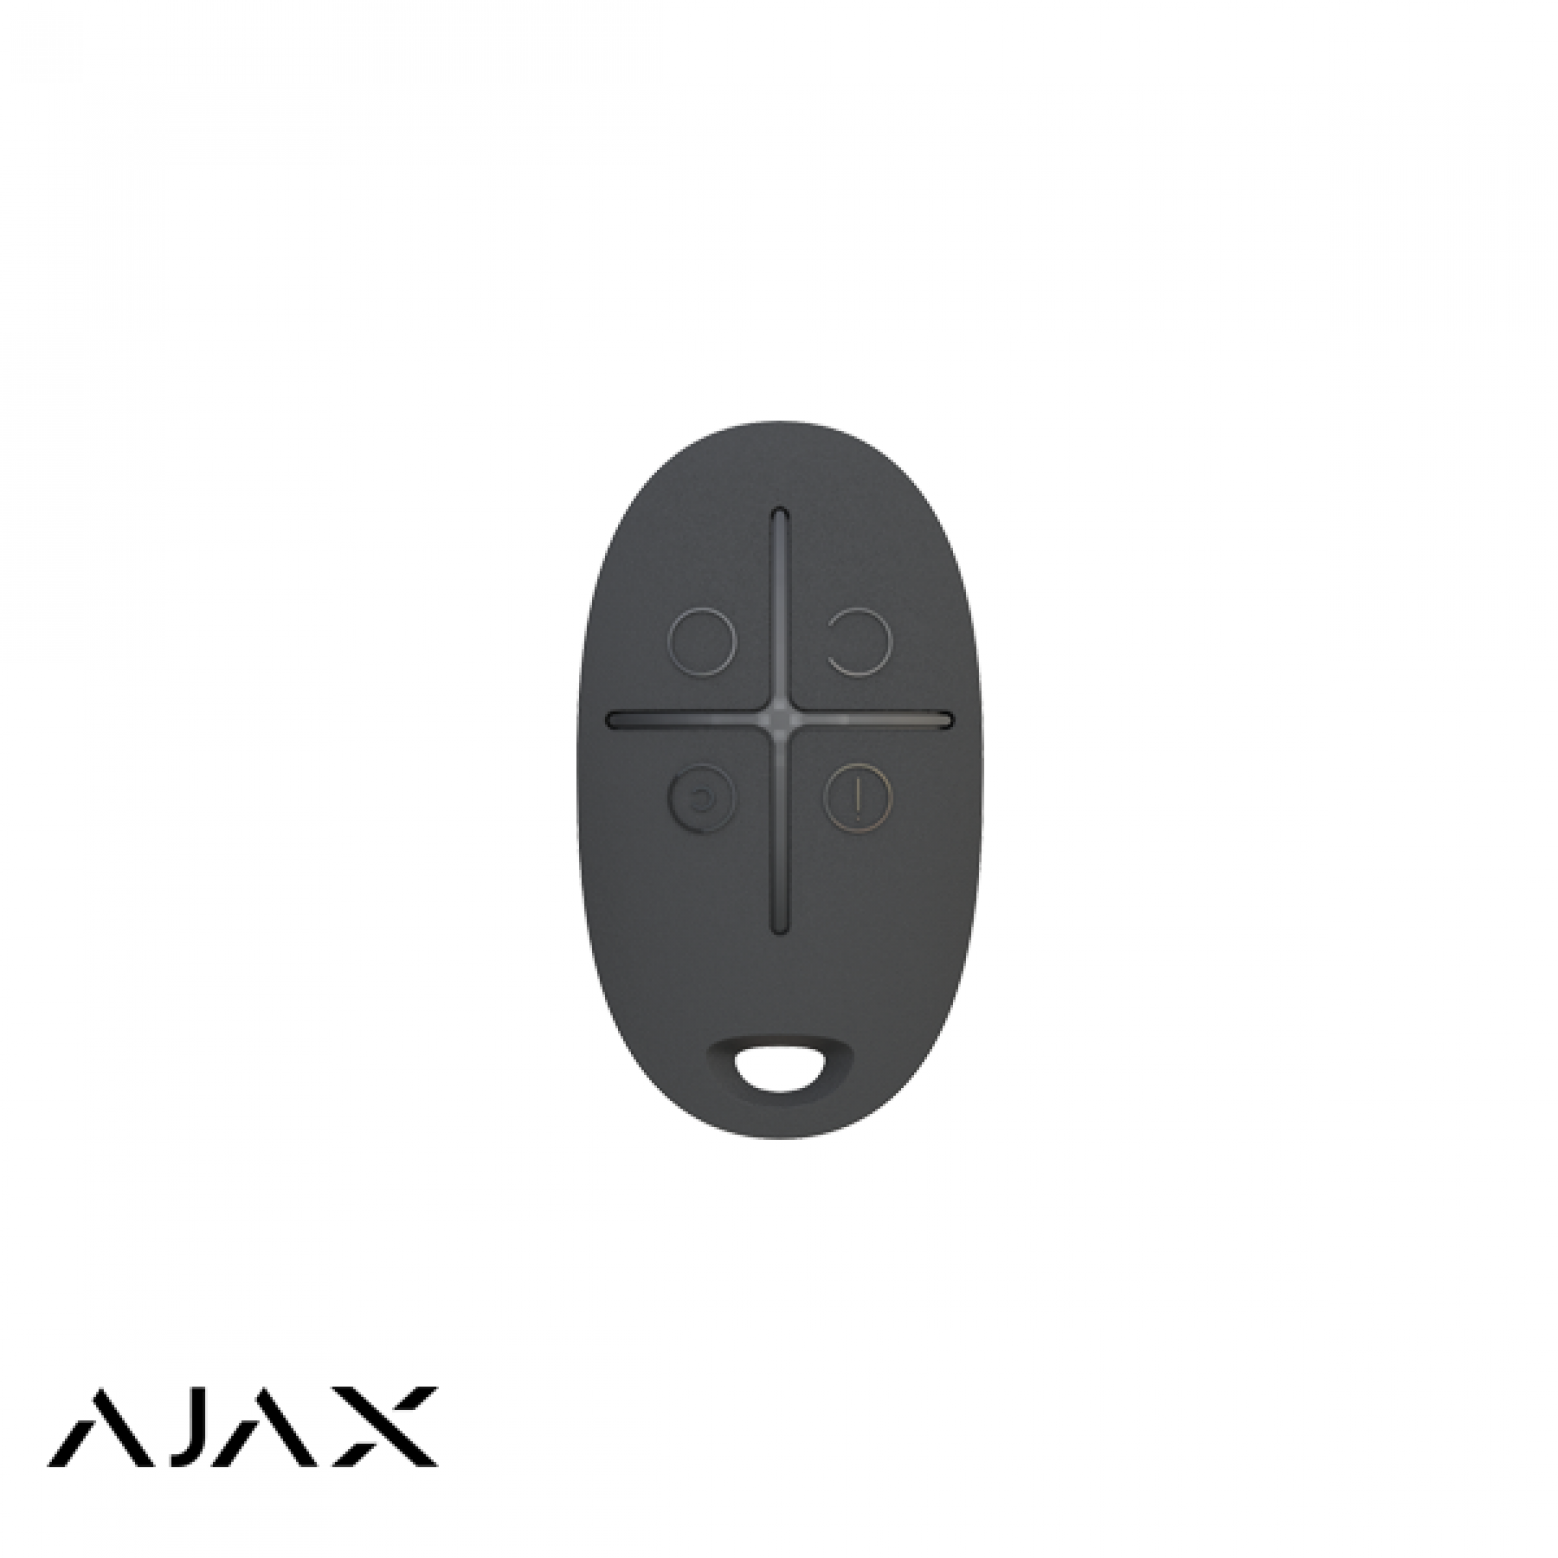 AJAX SpaceControl wireless remote control